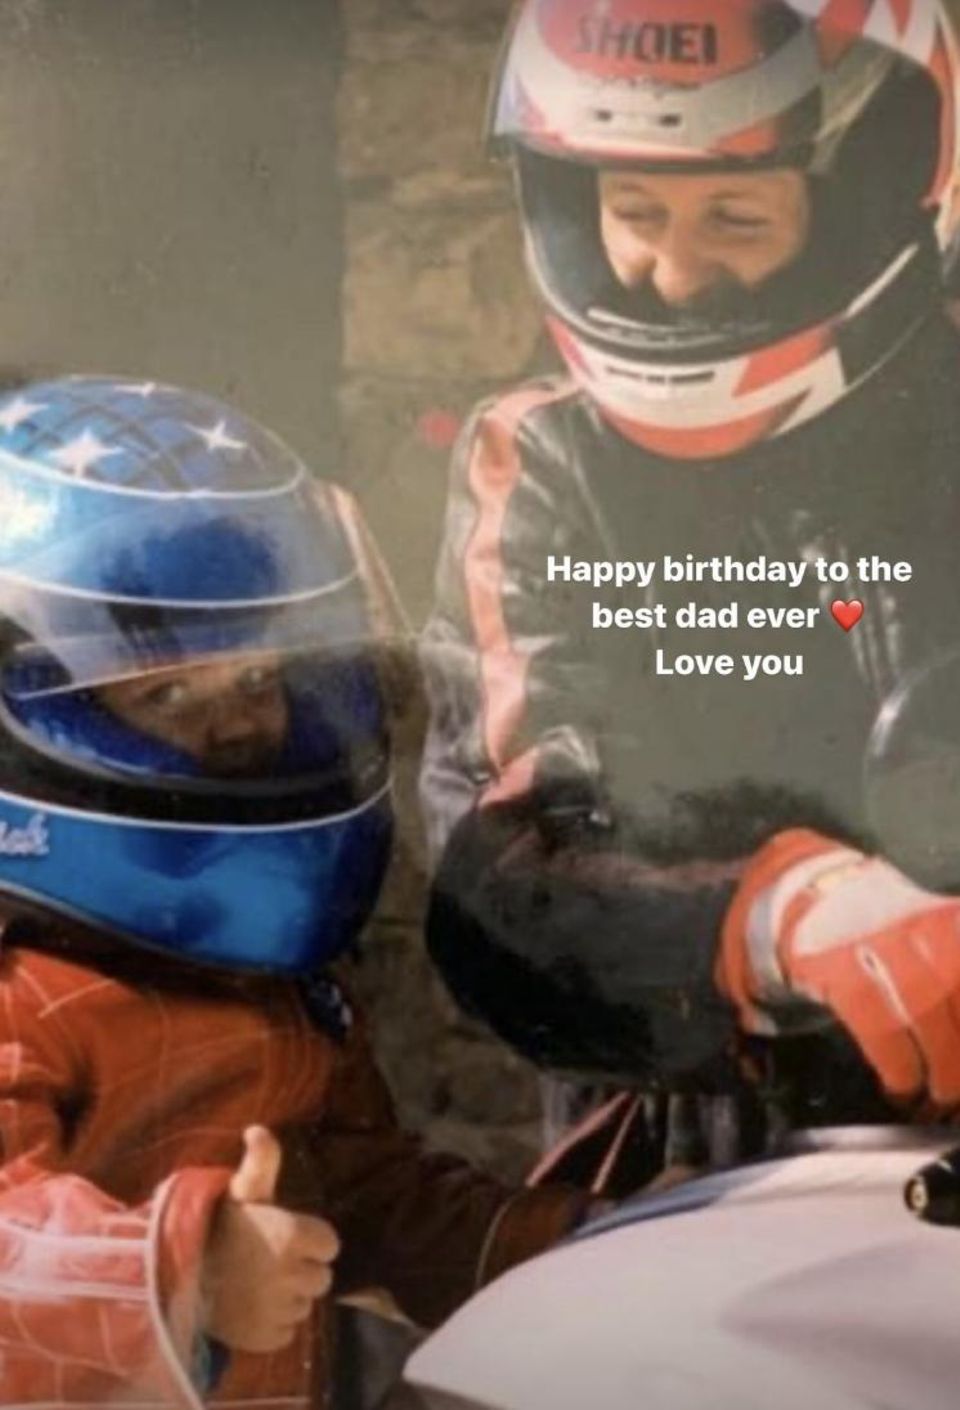 Mick Schumacher: Emotional post for his father Michael Schumacher's birthday